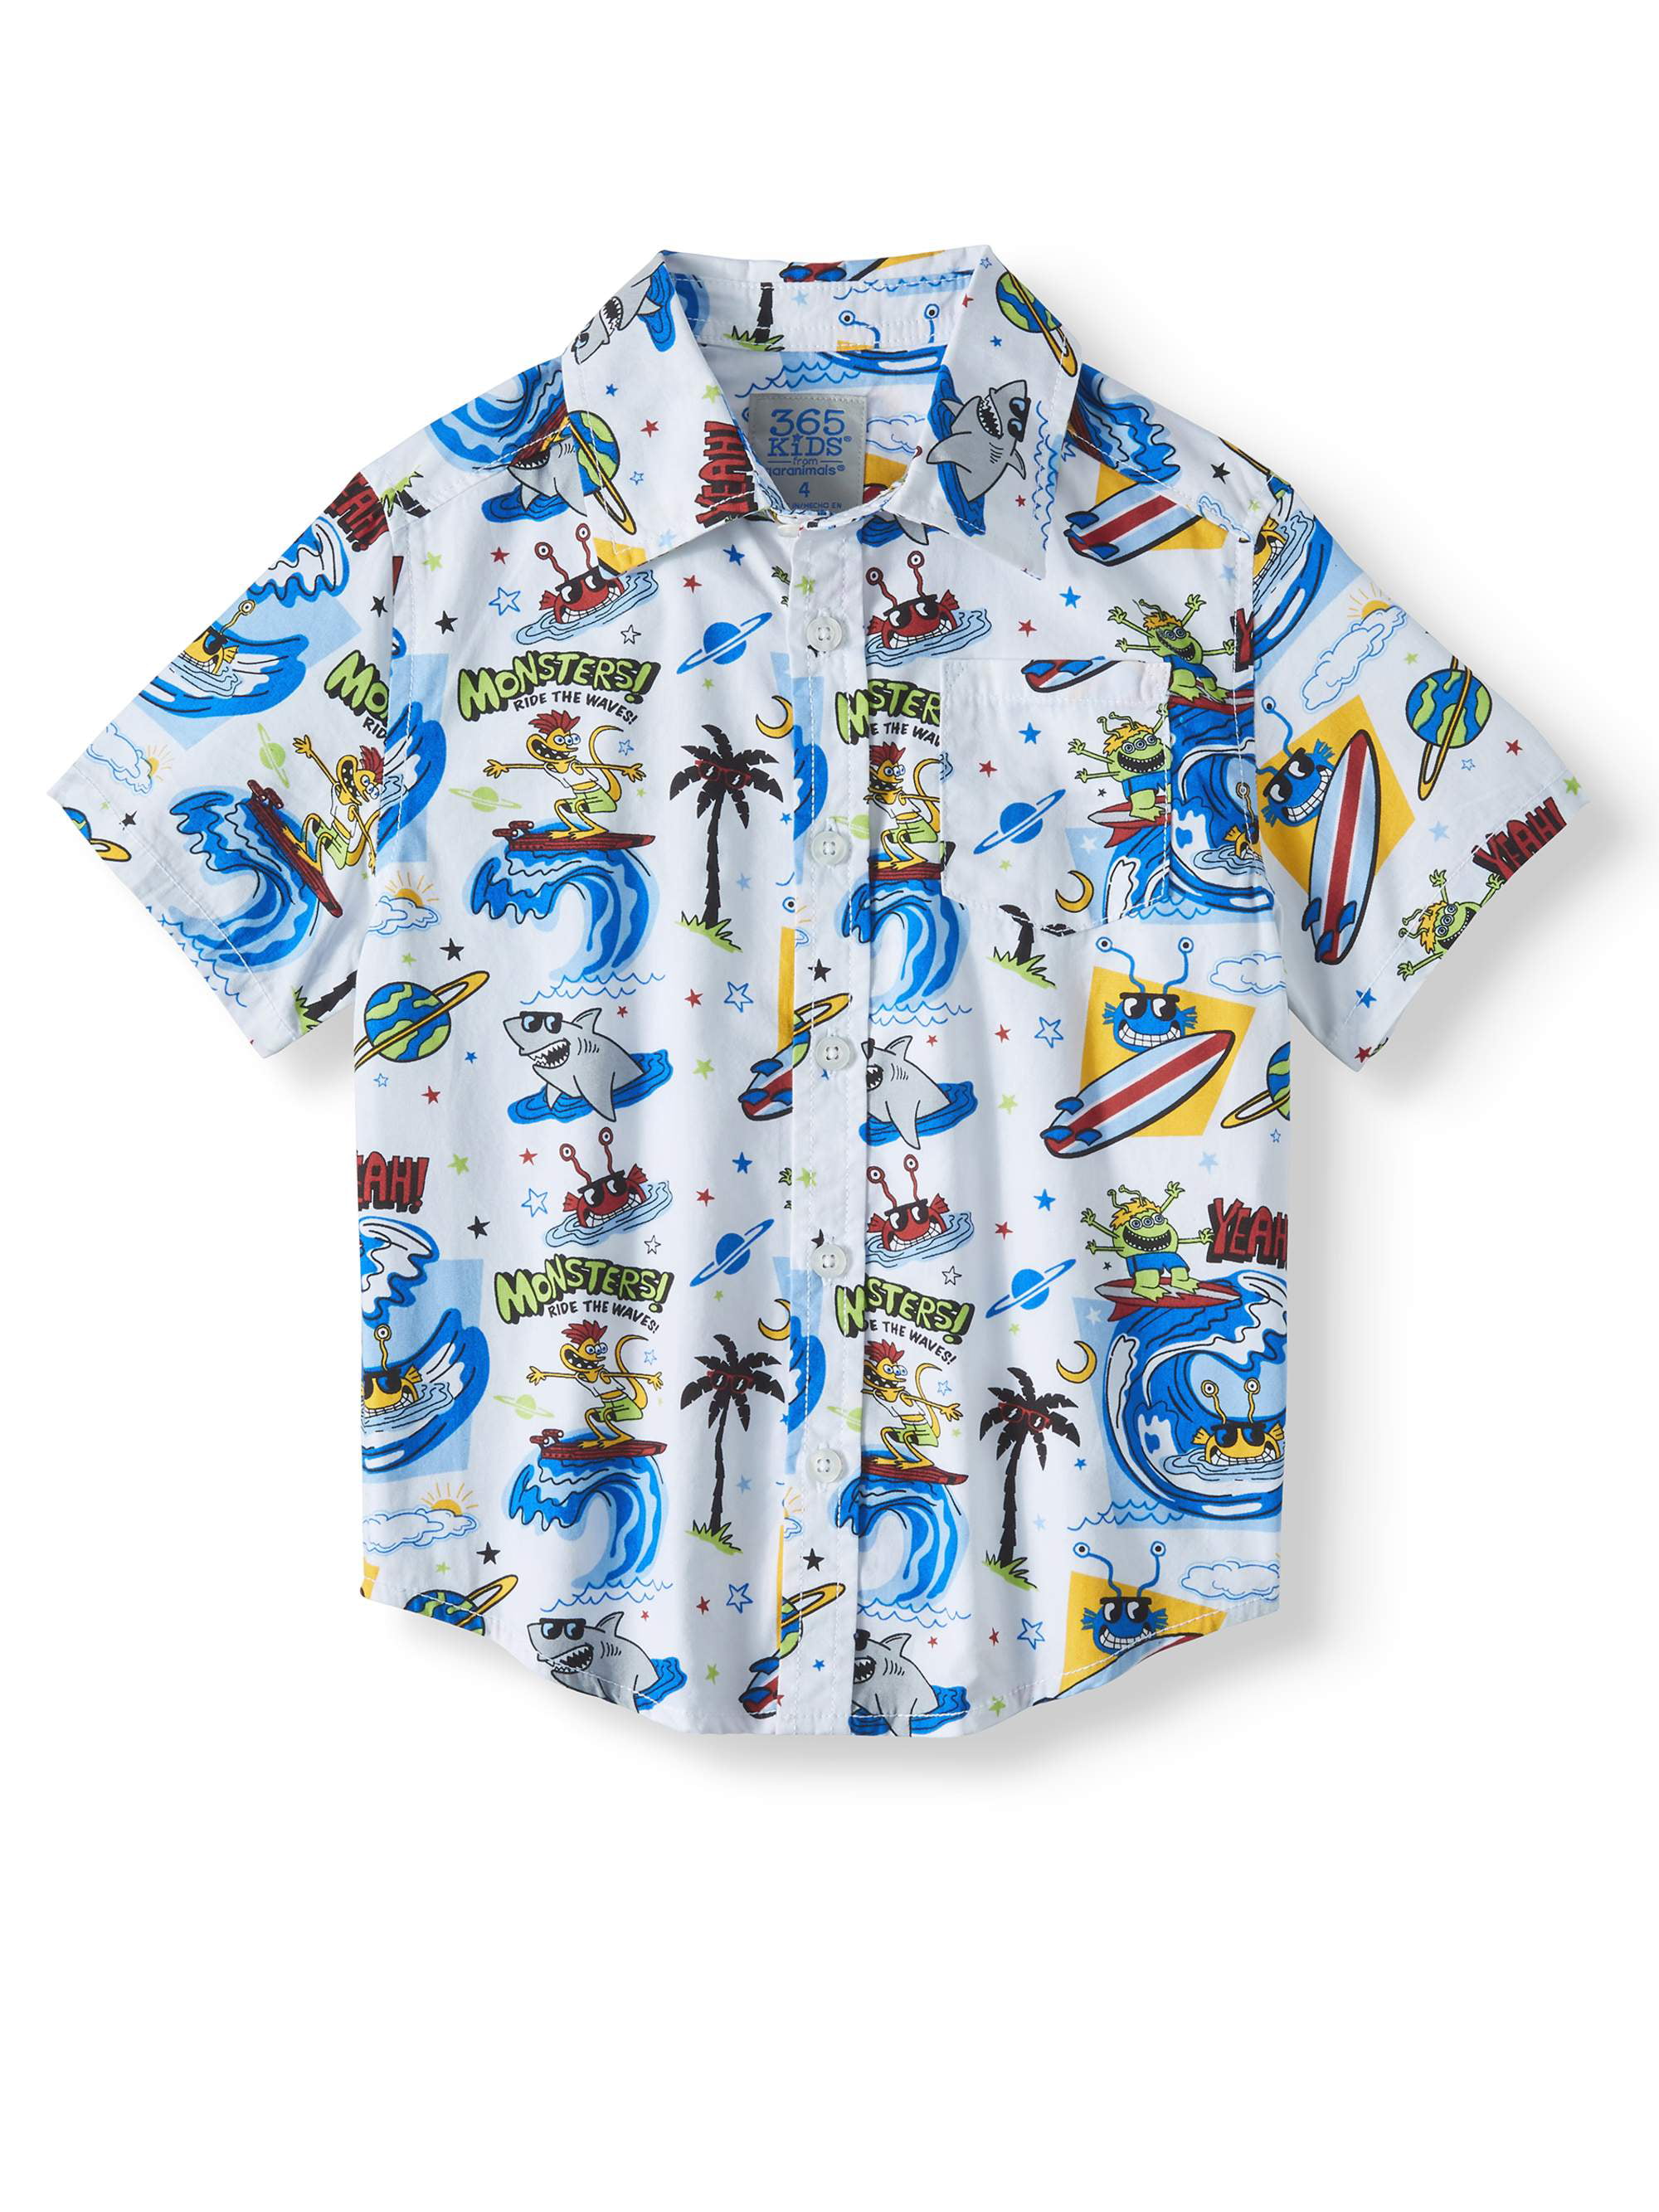 Button-Up Shirt Boy's Toddler Shirt Ready to Ship Kleding Jongenskleding Tops & T-shirts Size 2T 100% Cotton Japanese Script Print 